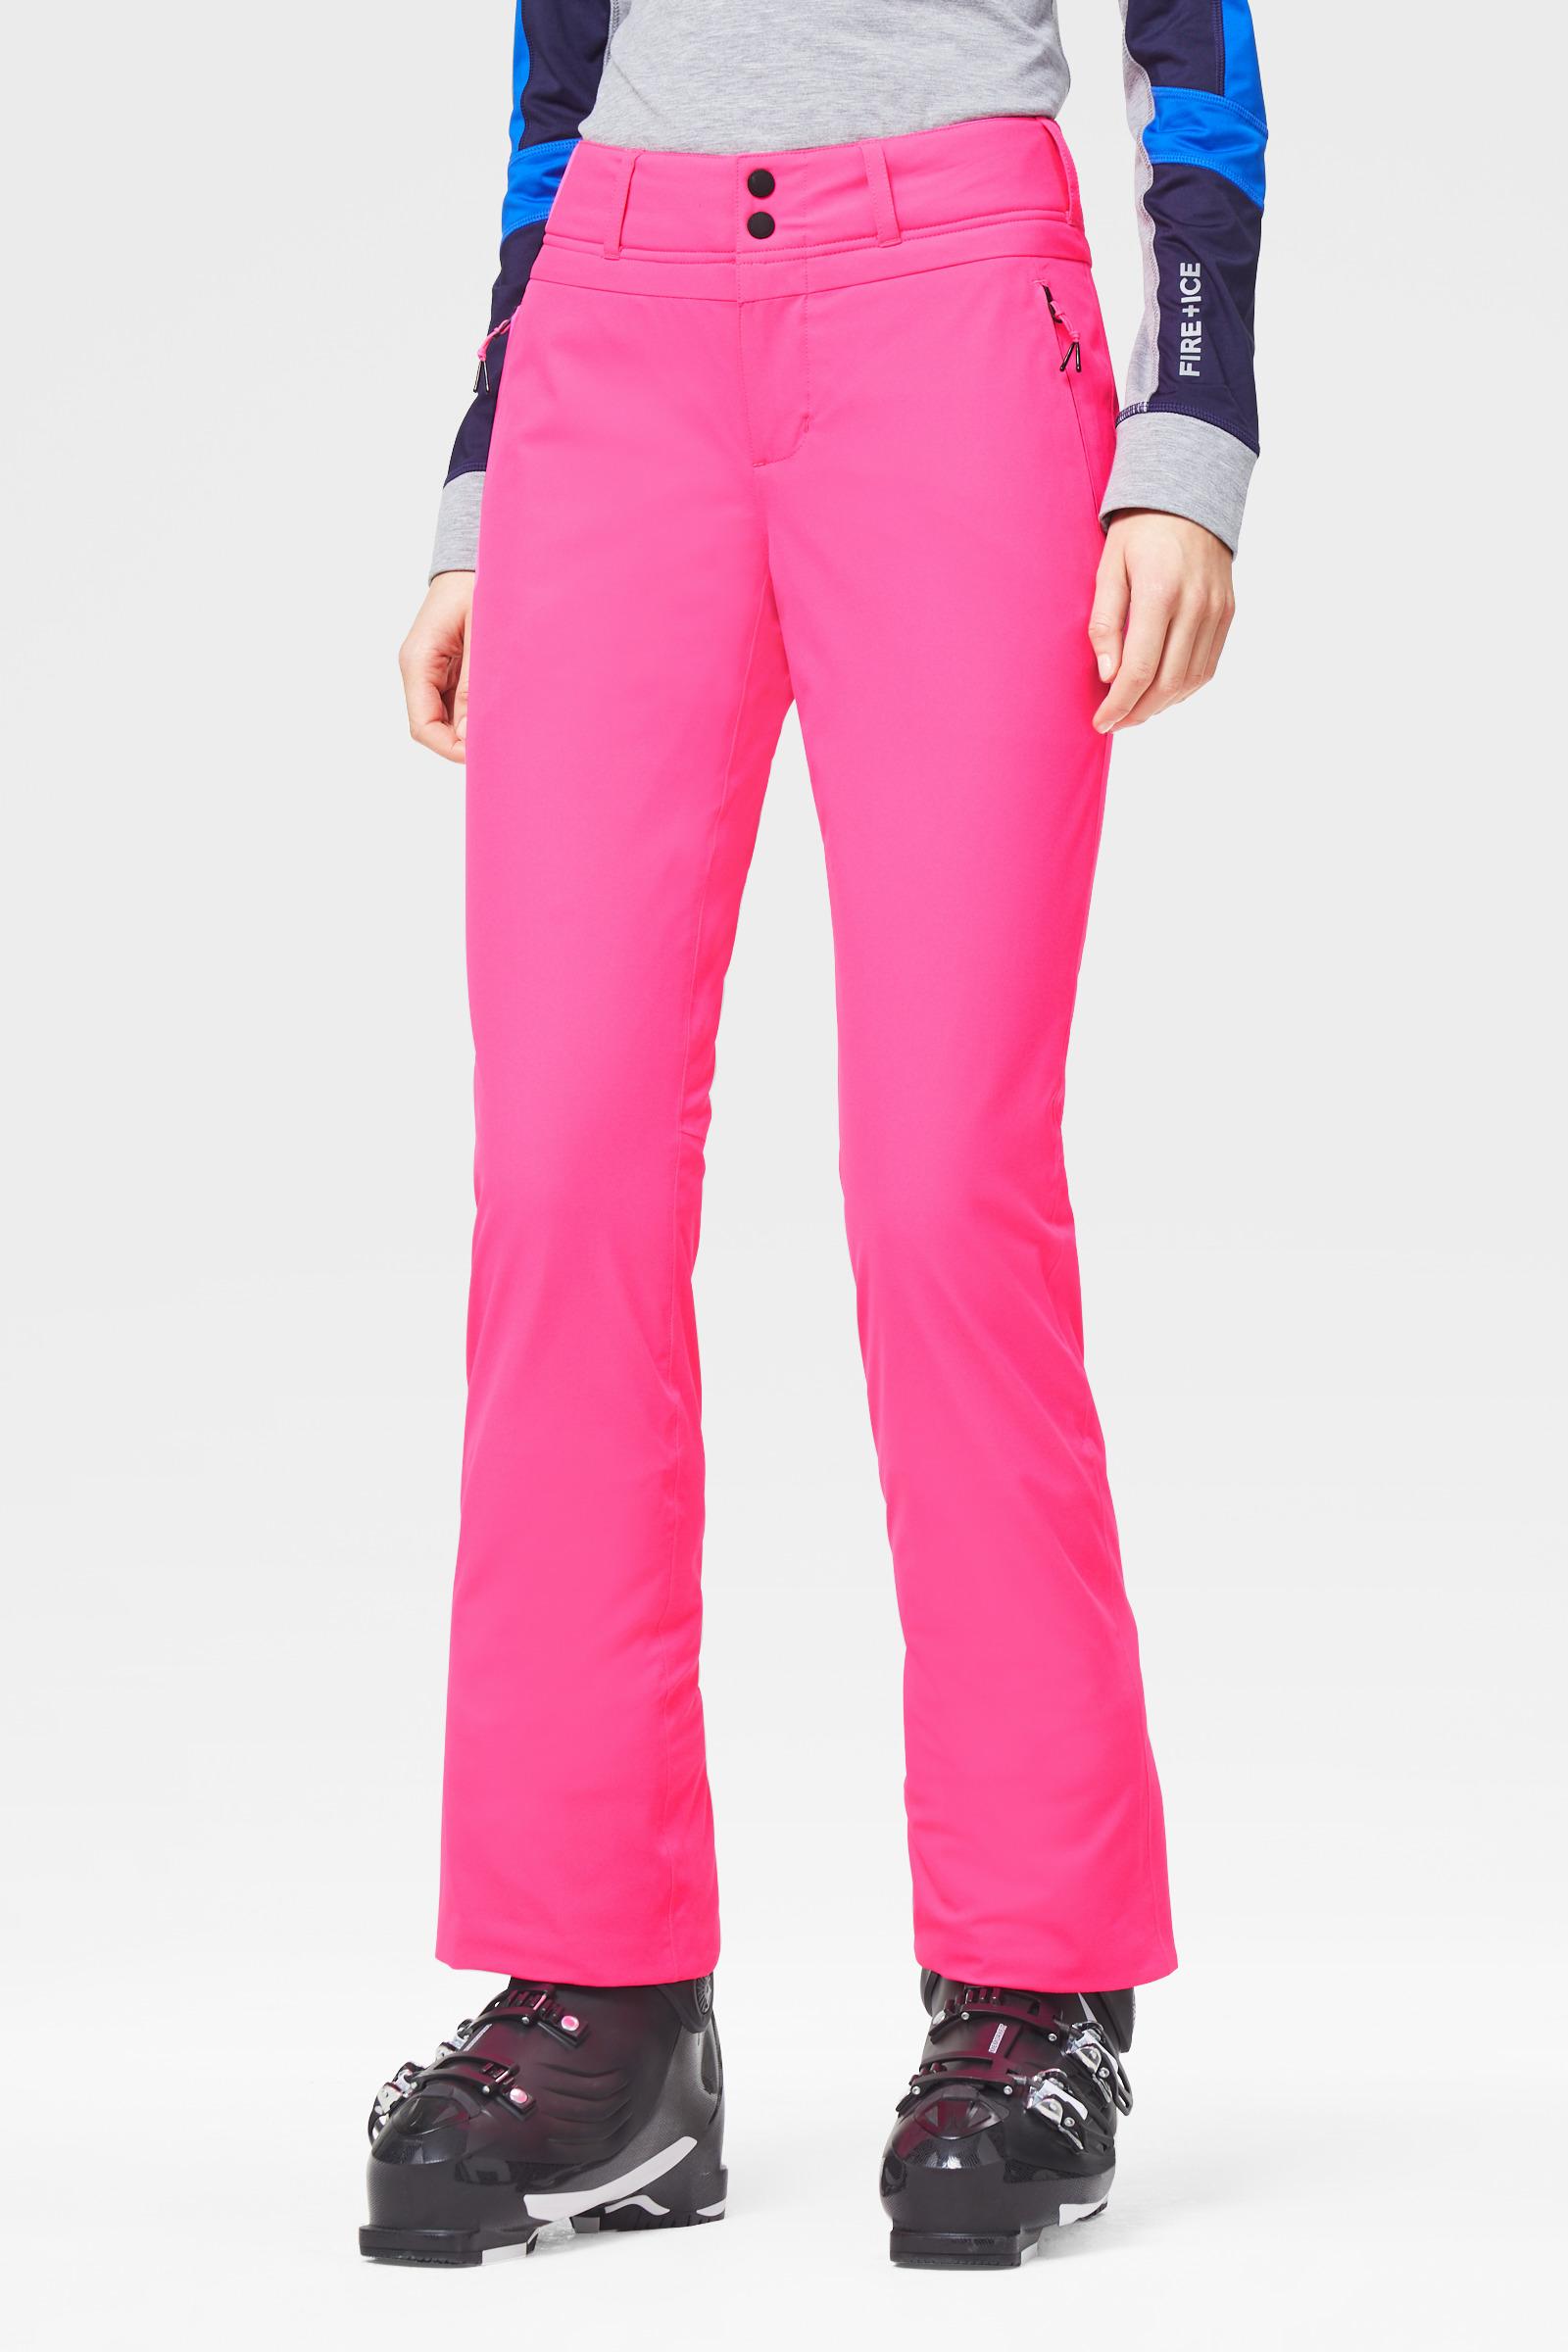 kopen teksten Graveren Bogner Synthetic Neda Ski Pants in Pink - Lyst